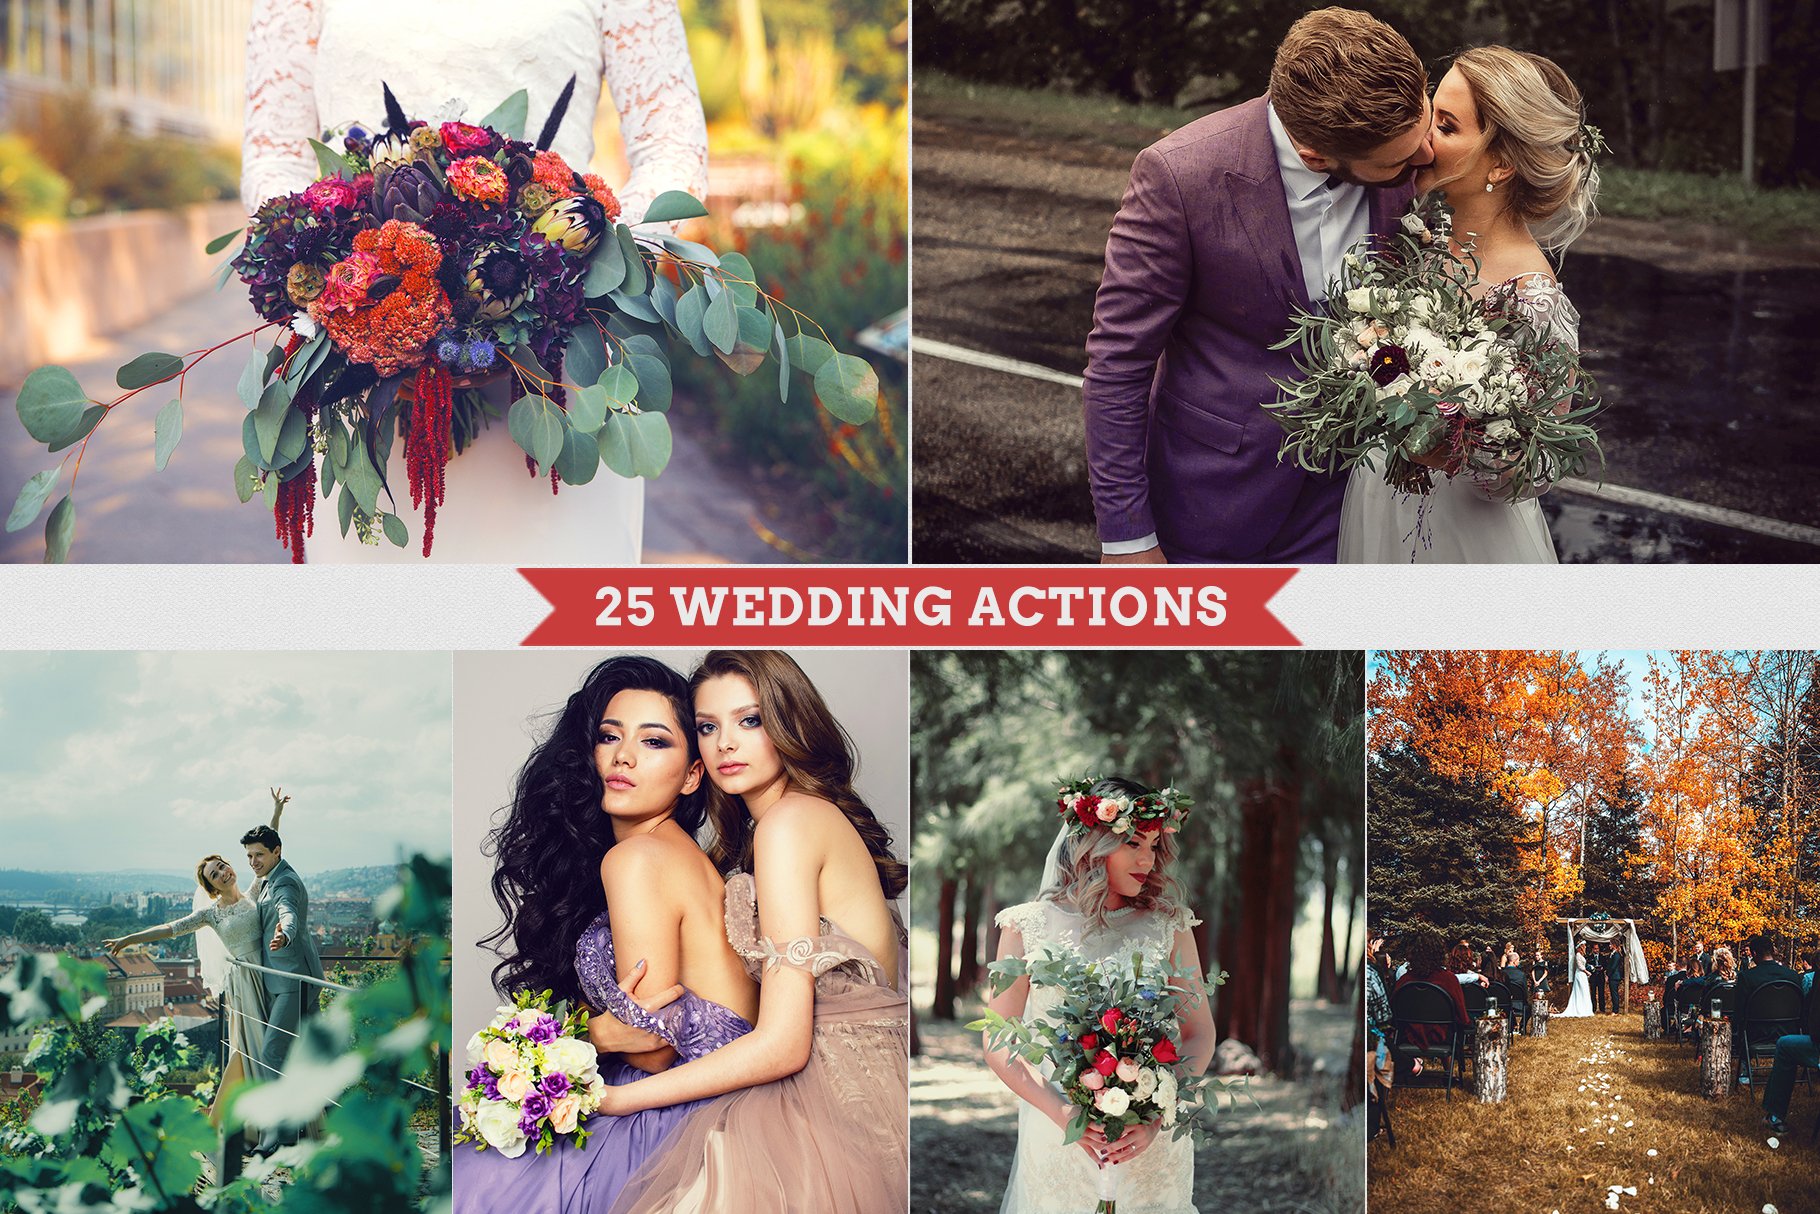 25 Wedding Photoshop Actionscover image.